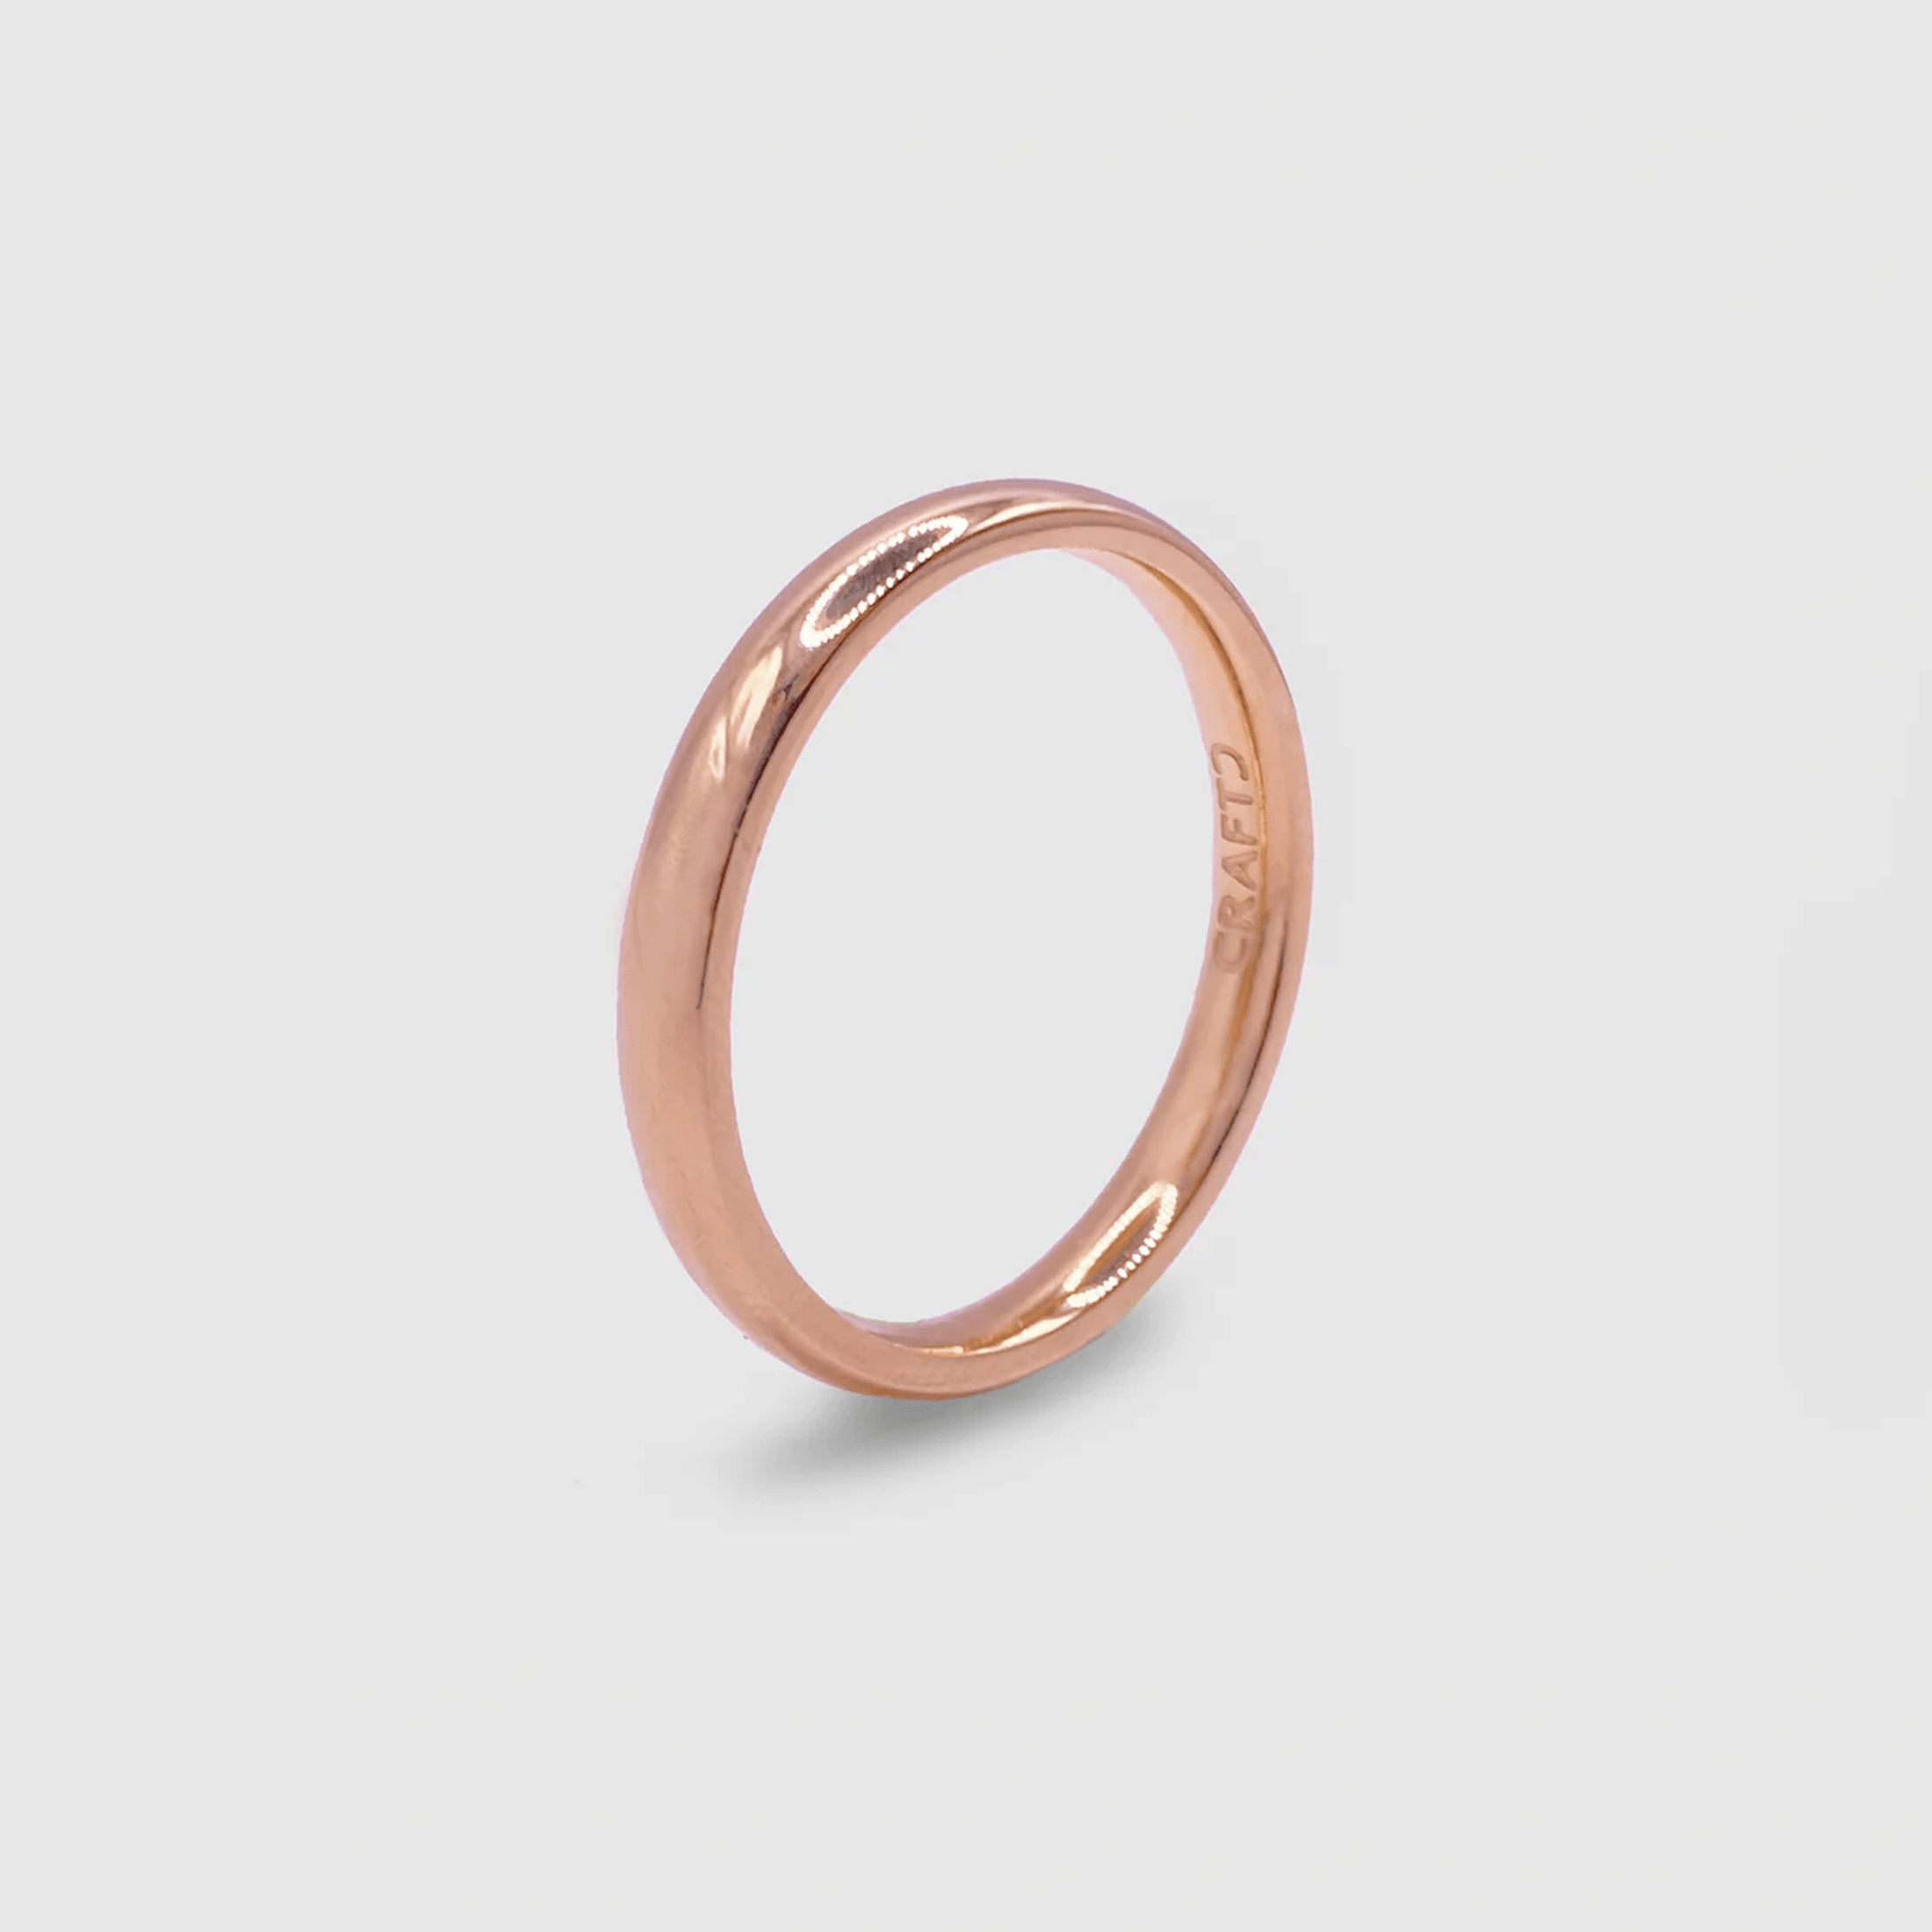 Round Band Ring (Rose Gold) 3mm